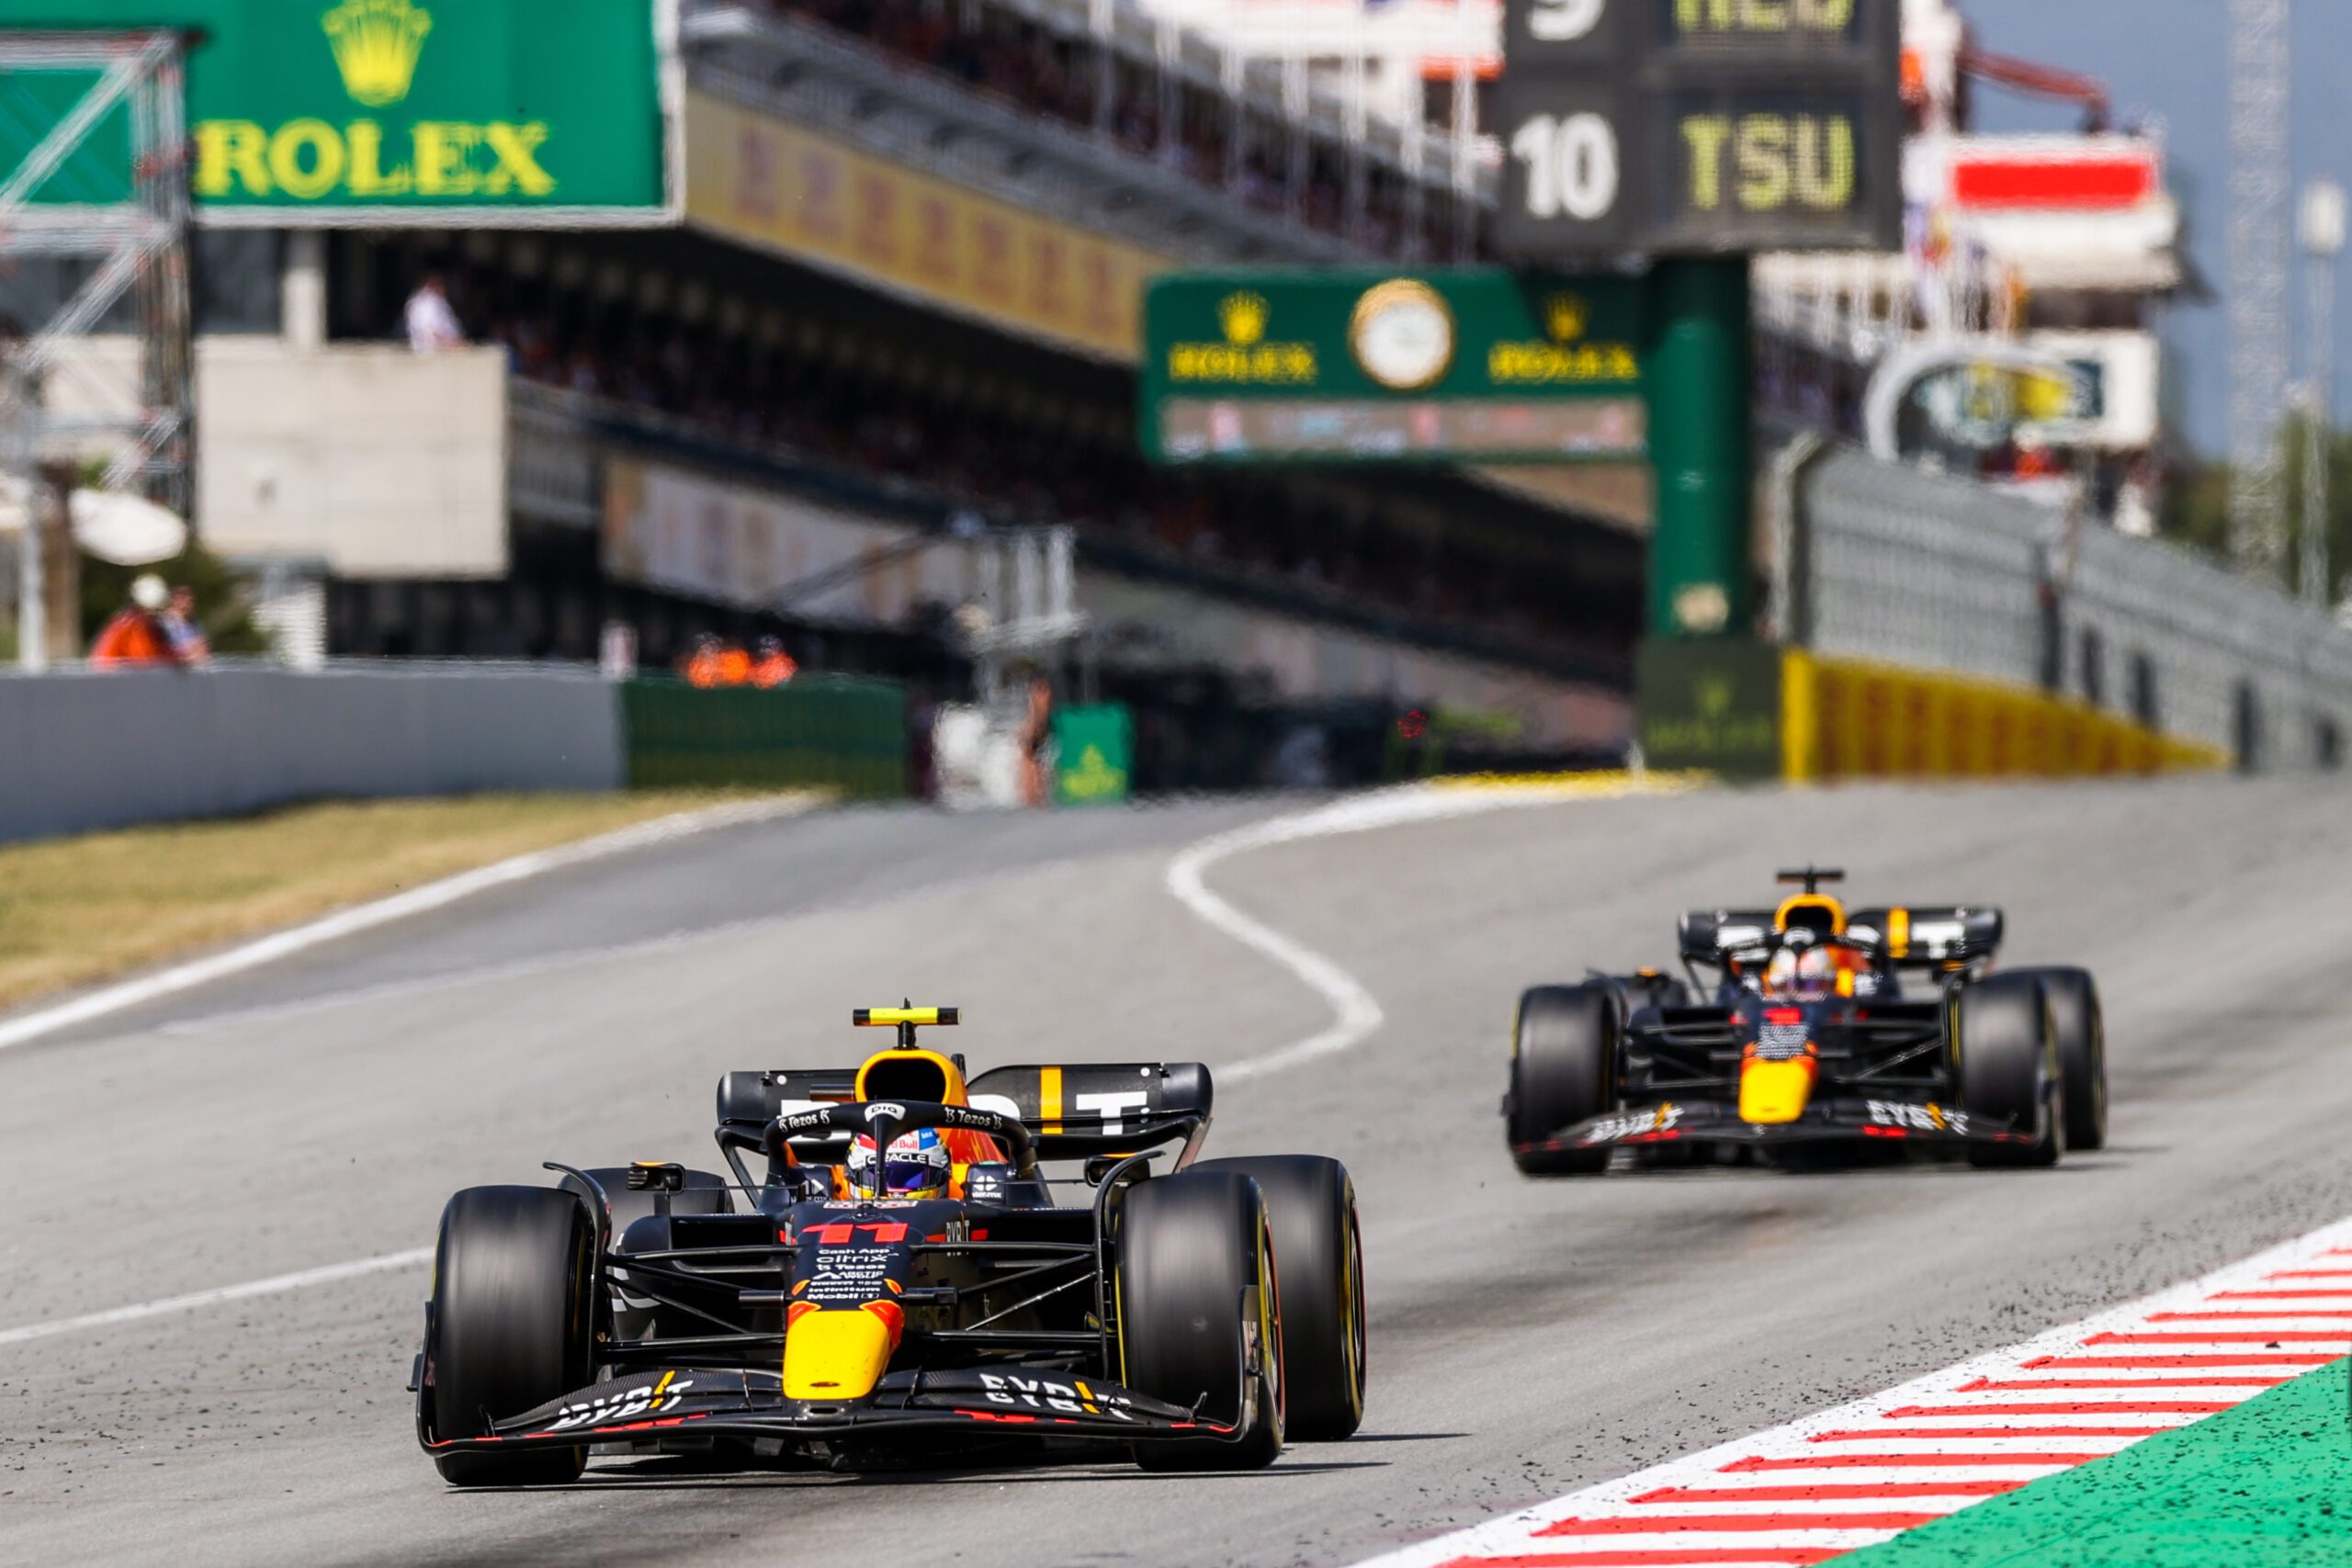 F1 - Vandoorne un peu déçu de la saison 2021 de Ricciardo chez McLaren